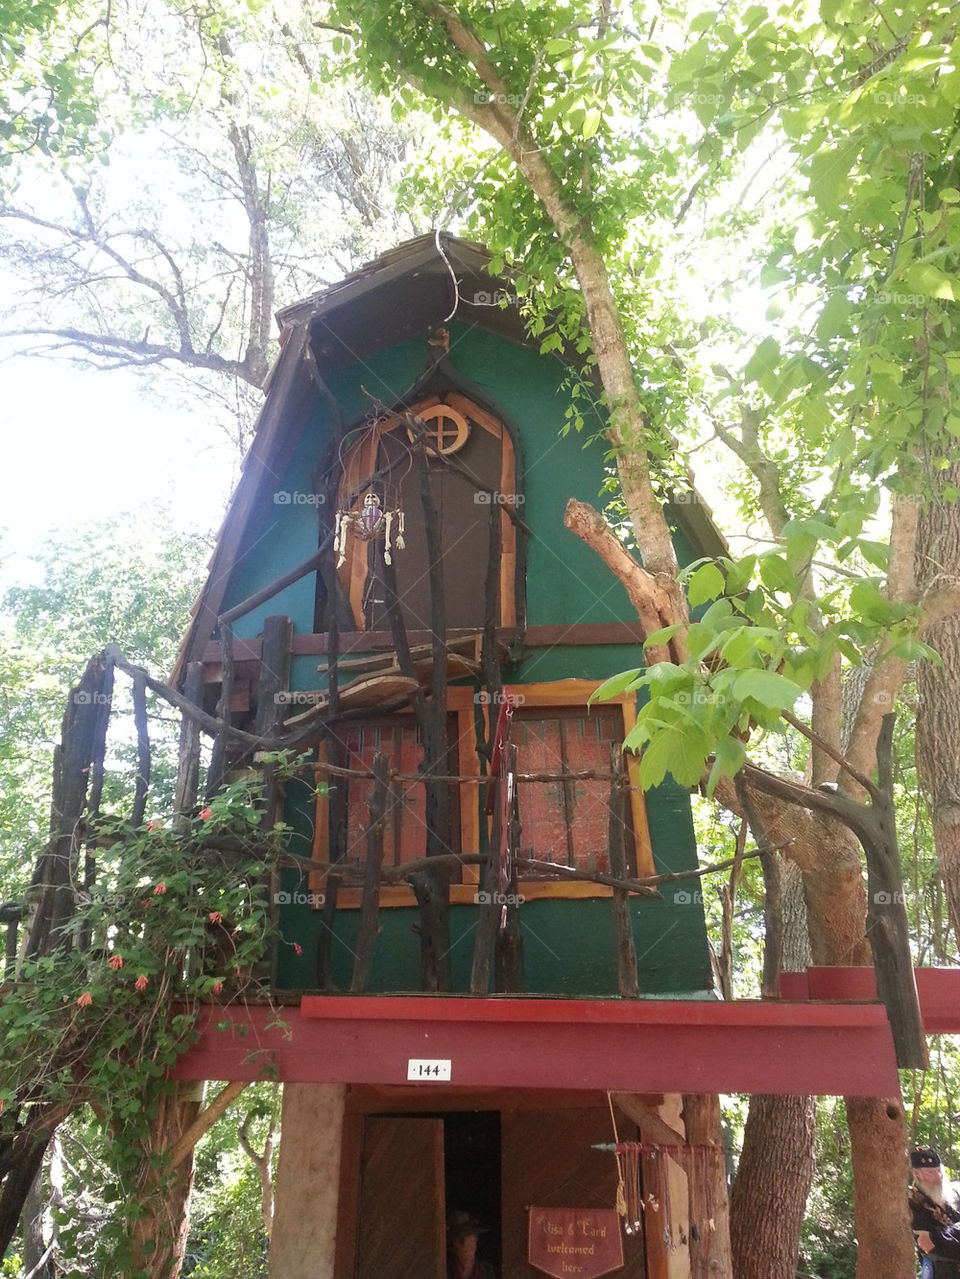 Whimsical Treehouse